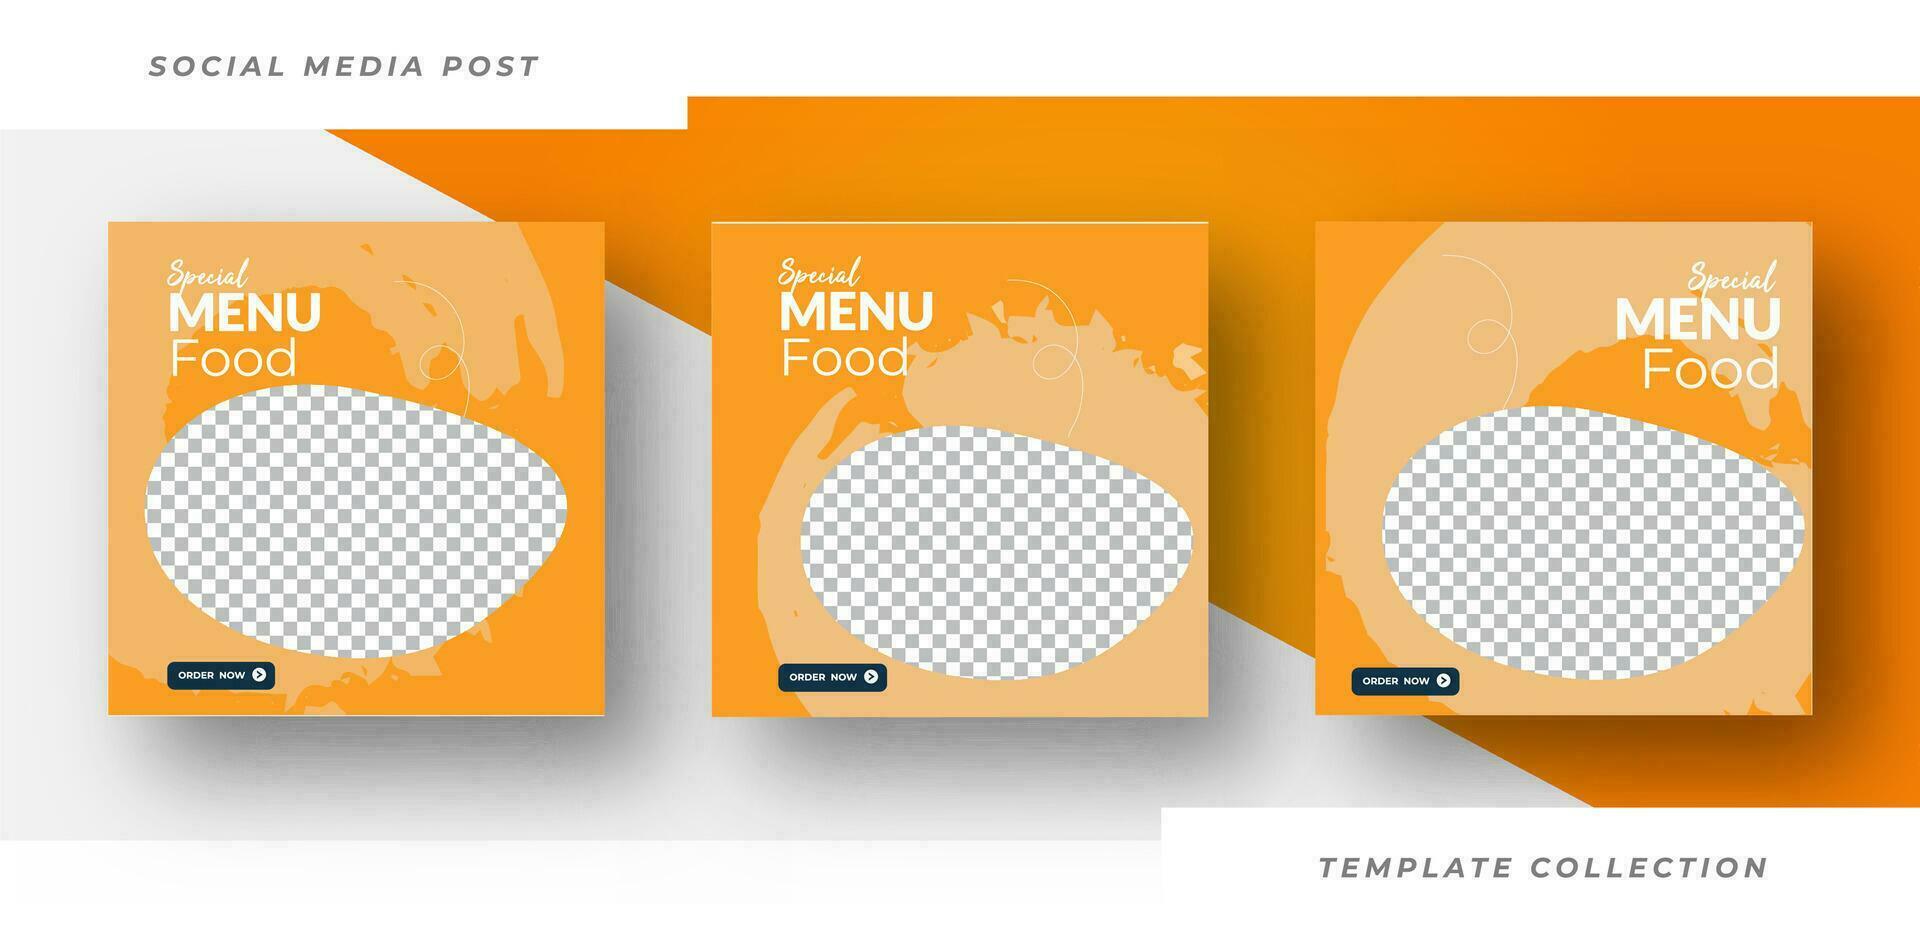 Special Menu Food banner social media post template design. Suitable for Social Media Post Restaurant menu banner social media post. Pro Vector